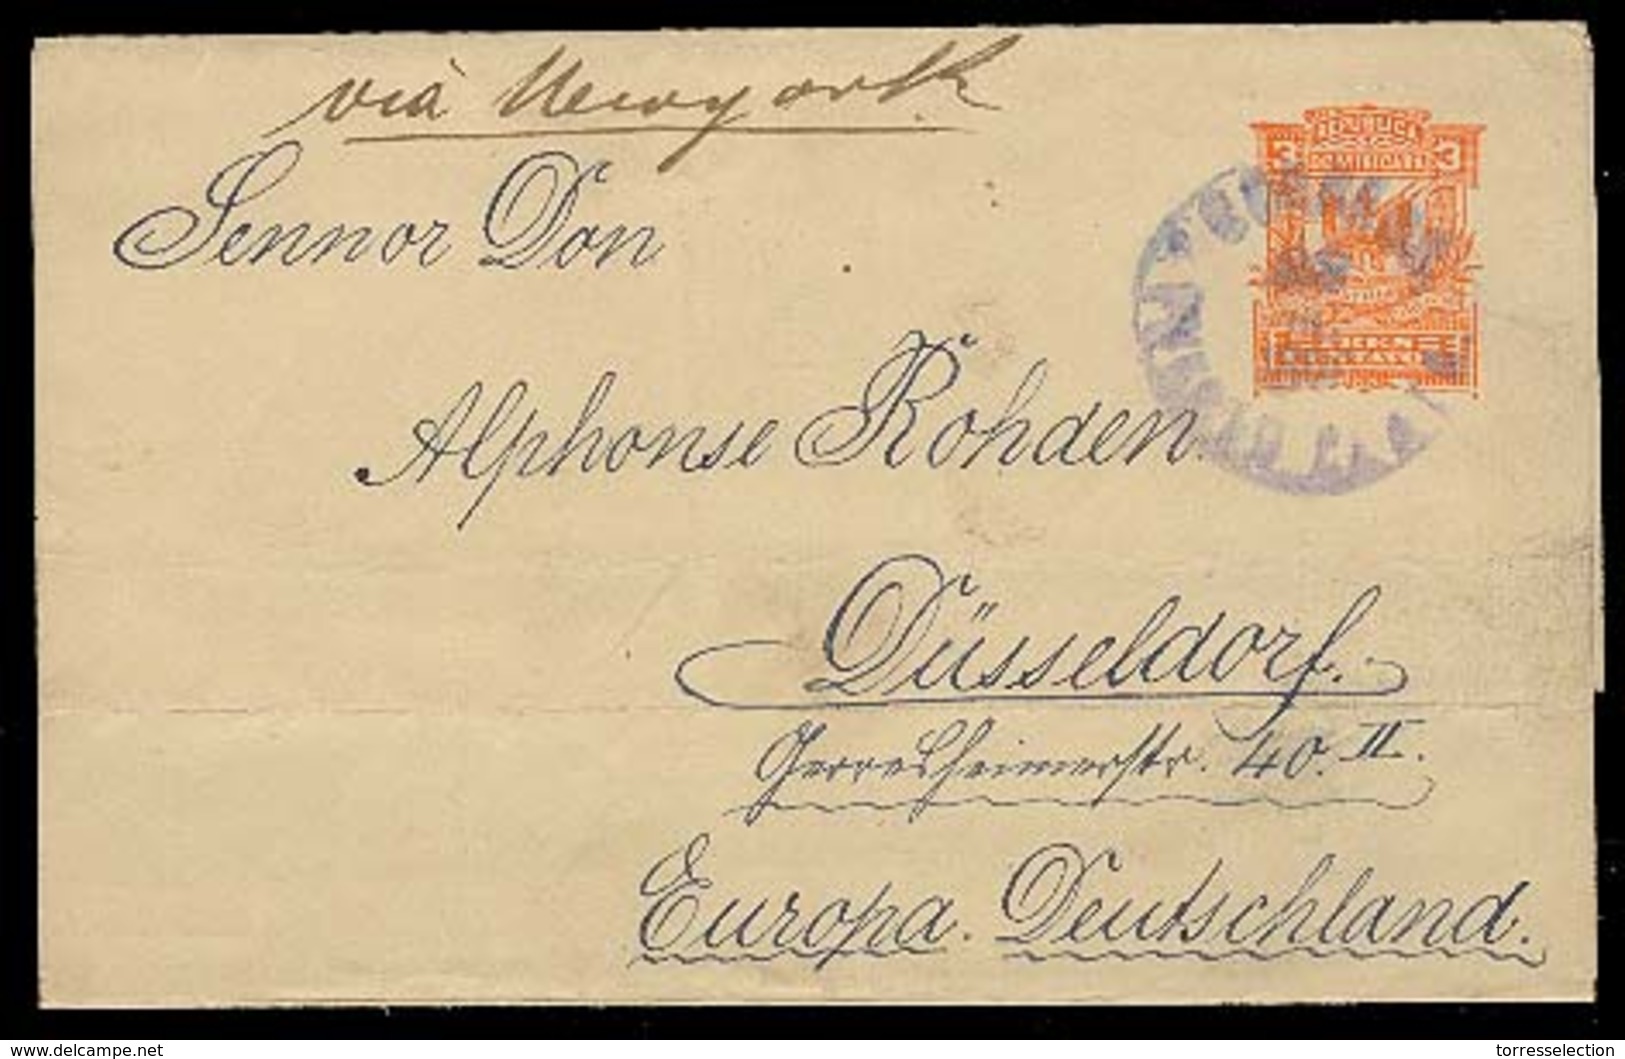 DOMINICAN REP. 1890. P. Plata - Germany. 3c Orange Stat Wrapper Complete Used. Scarce. - Dominicaine (République)